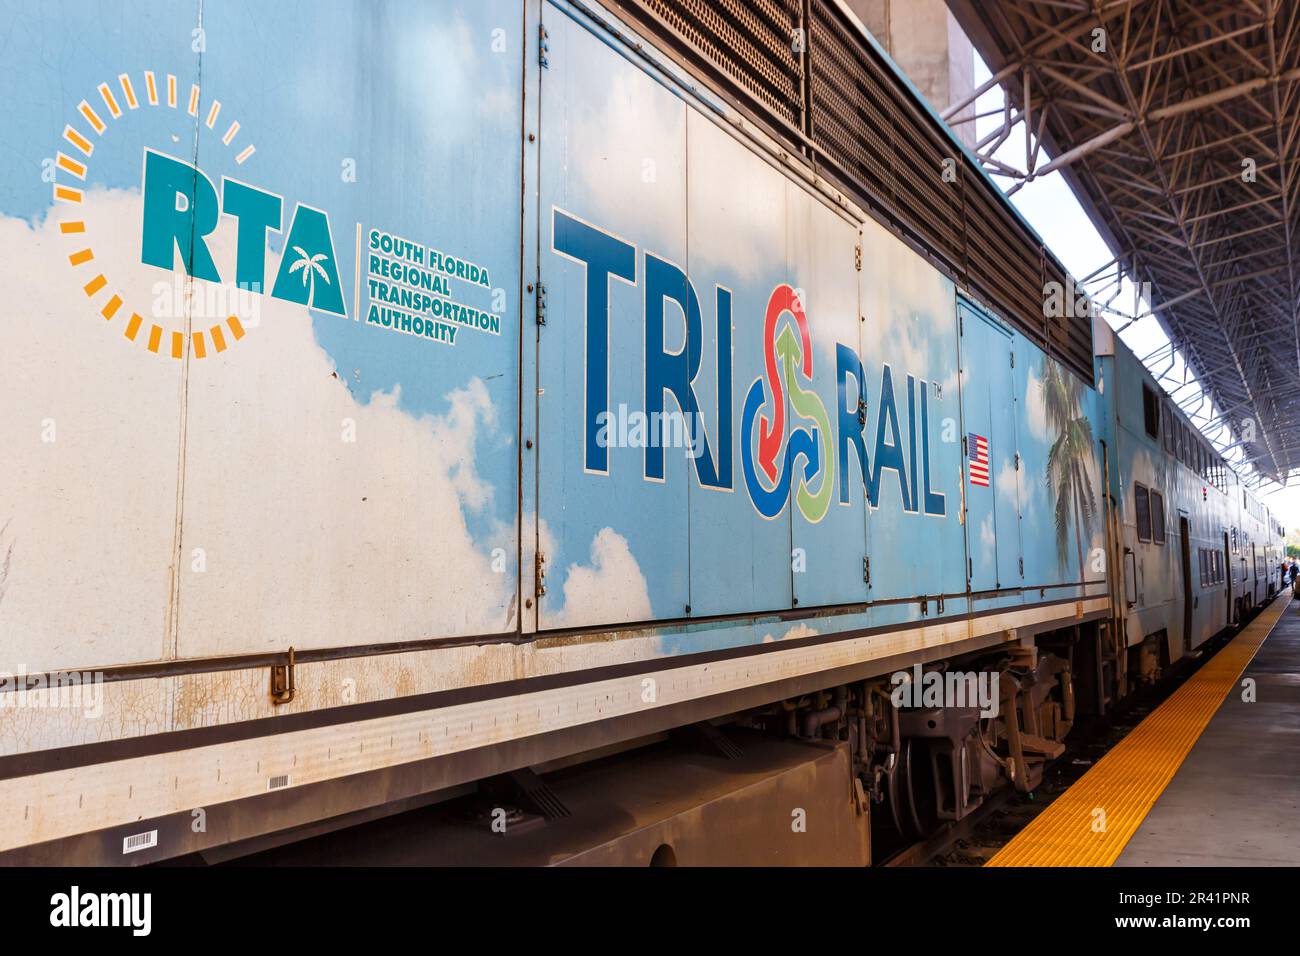 Tri-Rail logo on a regional train railroad at Miami Airport station in ...